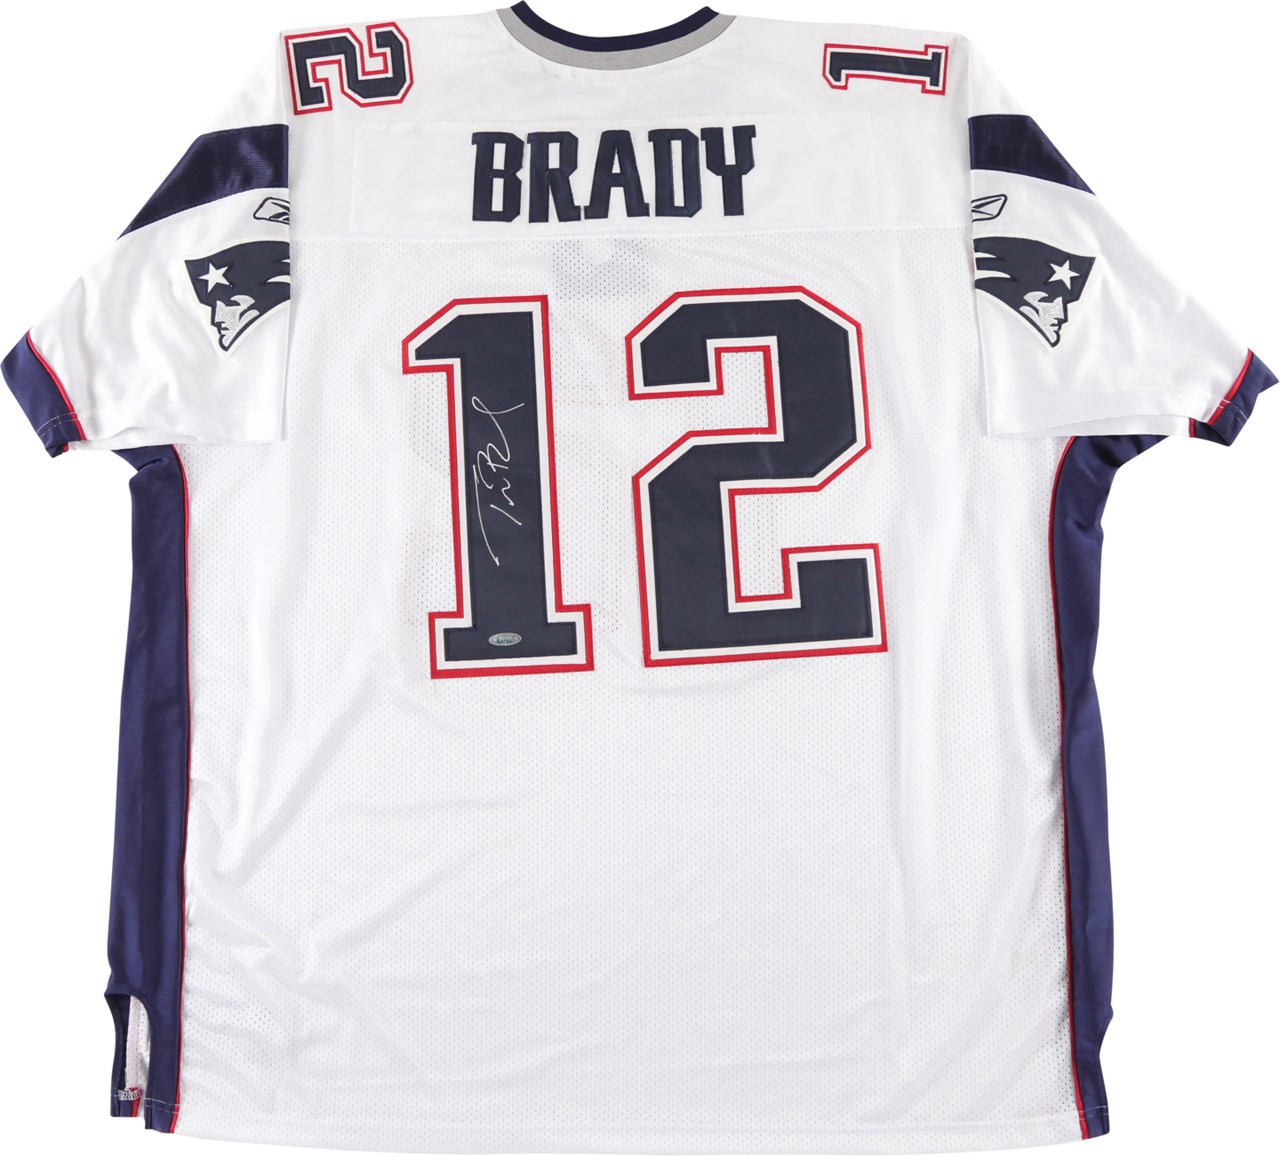 - 2005 Tom Brady Signed New England Patriots Jersey (Tristar)